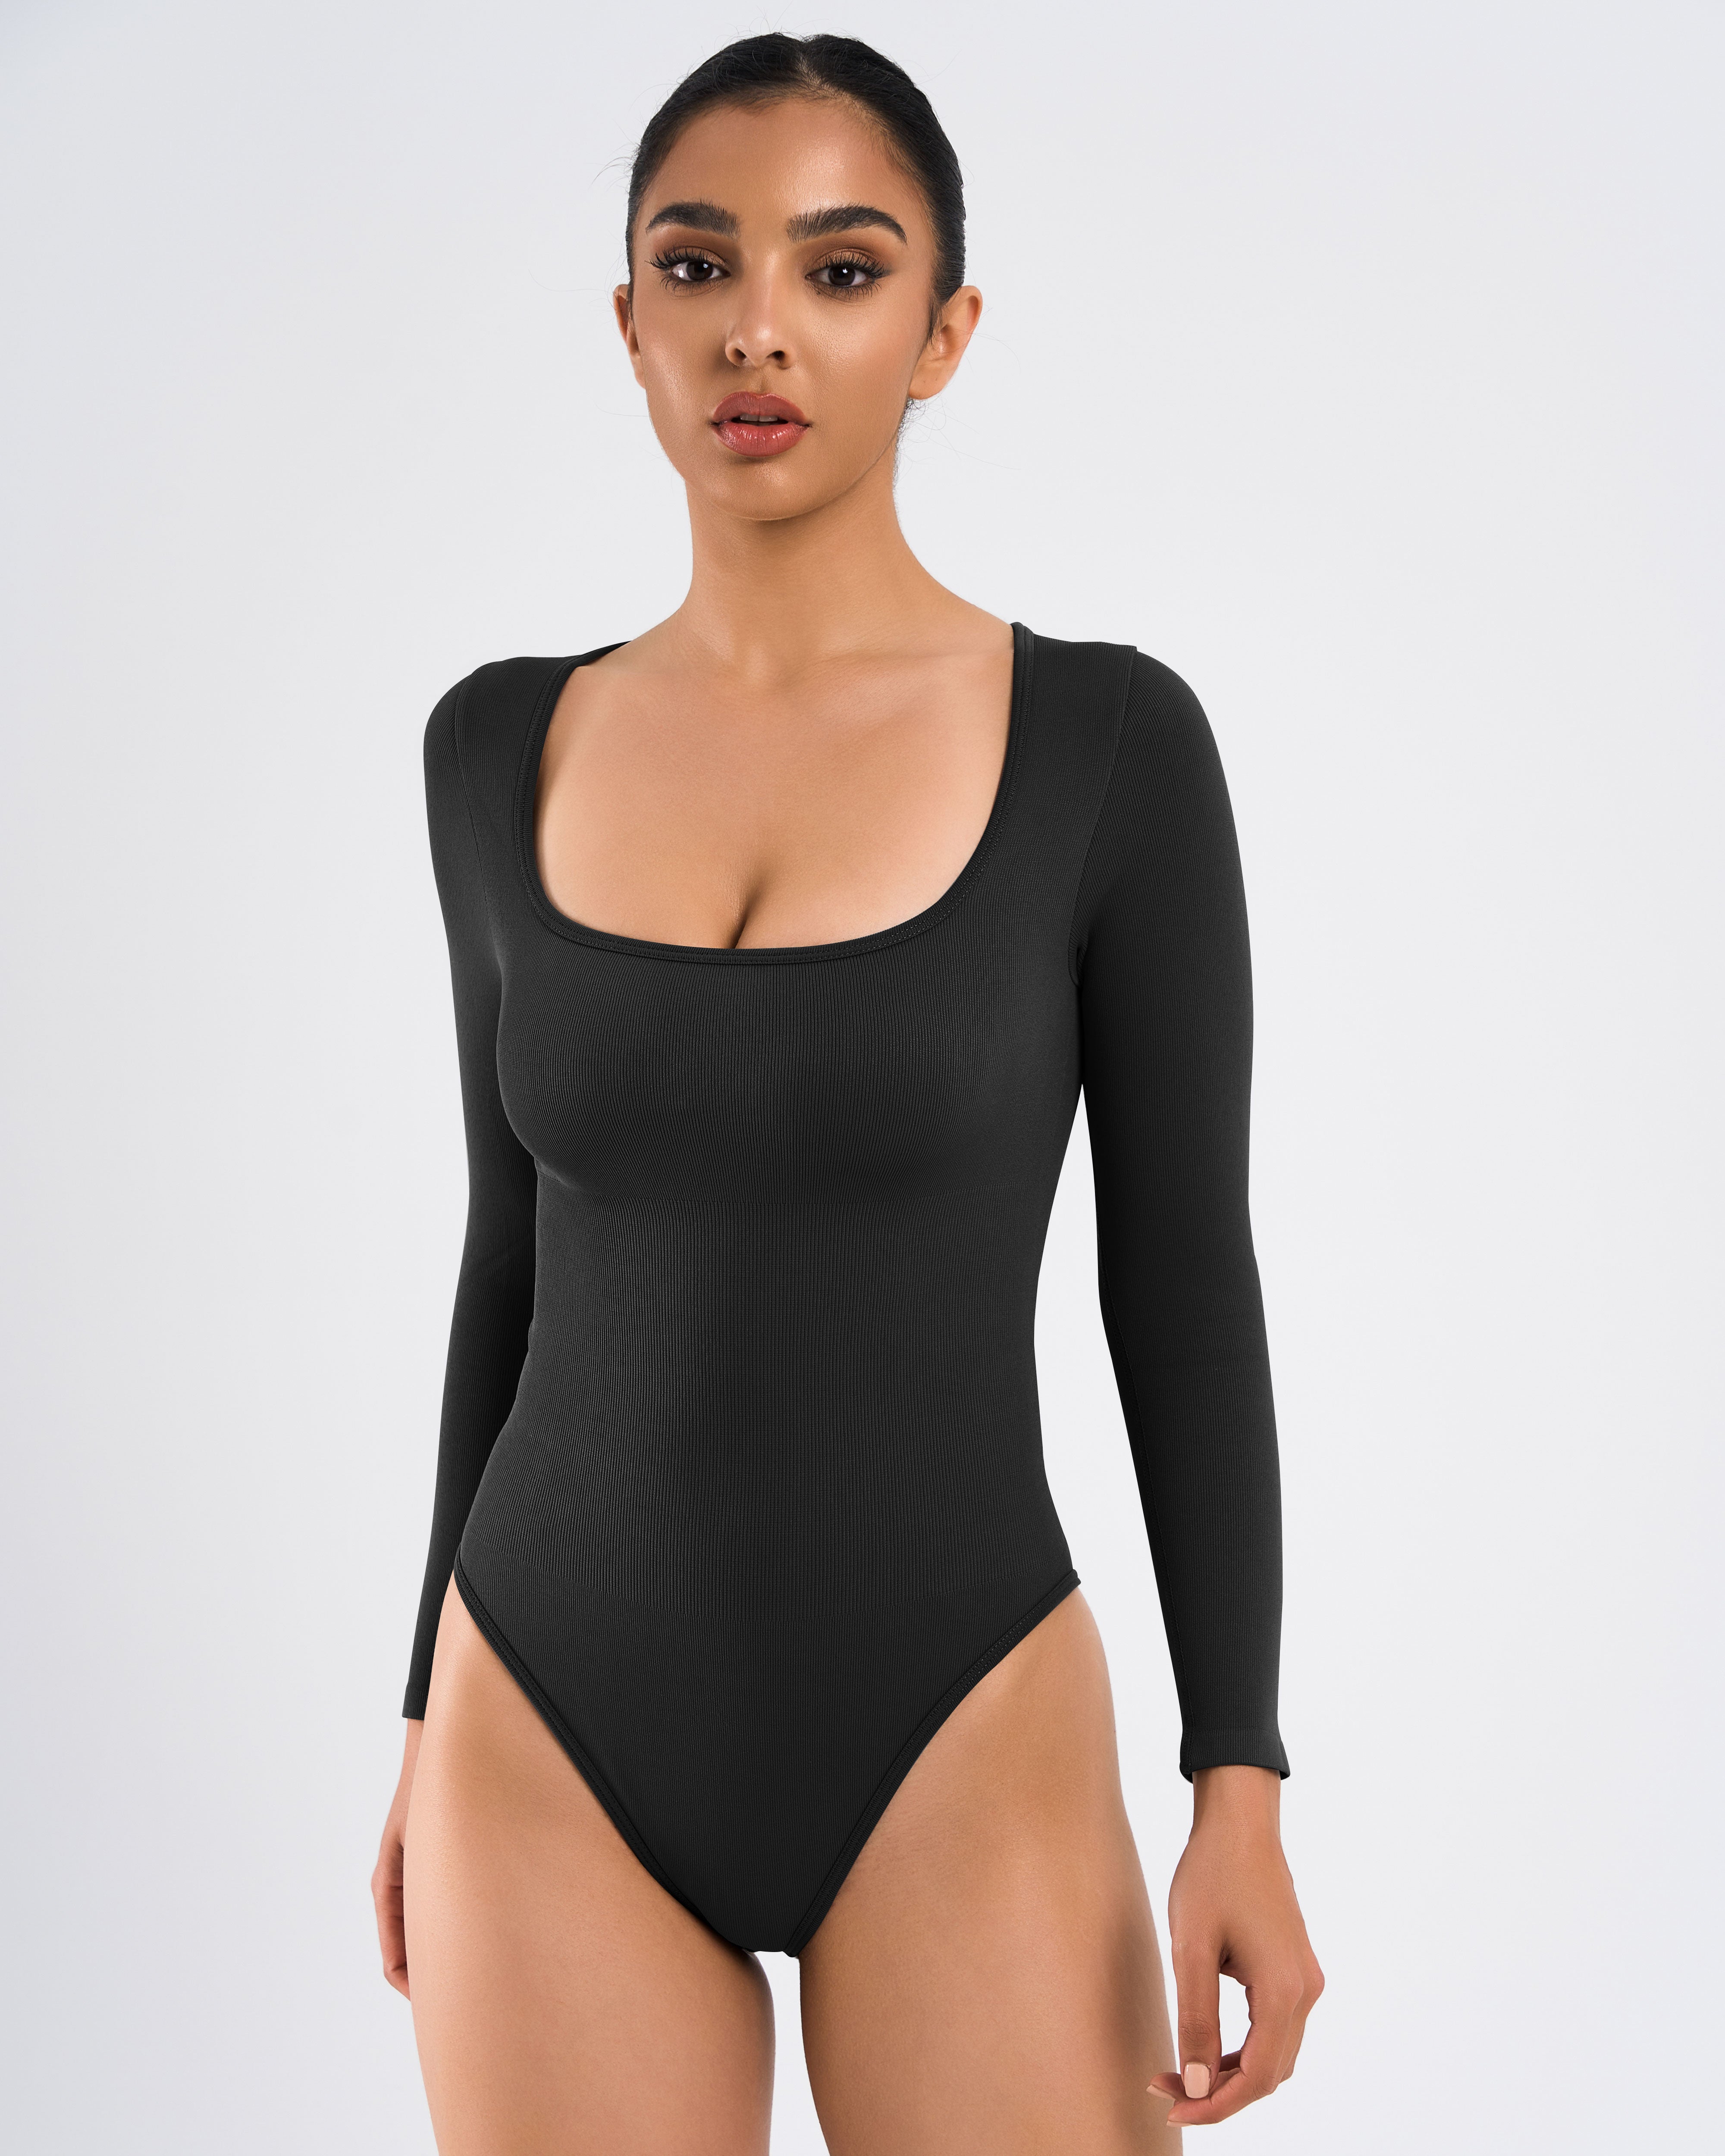 Shanna Mart  Amazing bodysuit 😍 #bodysuits #bodysuit #oqq #grwm